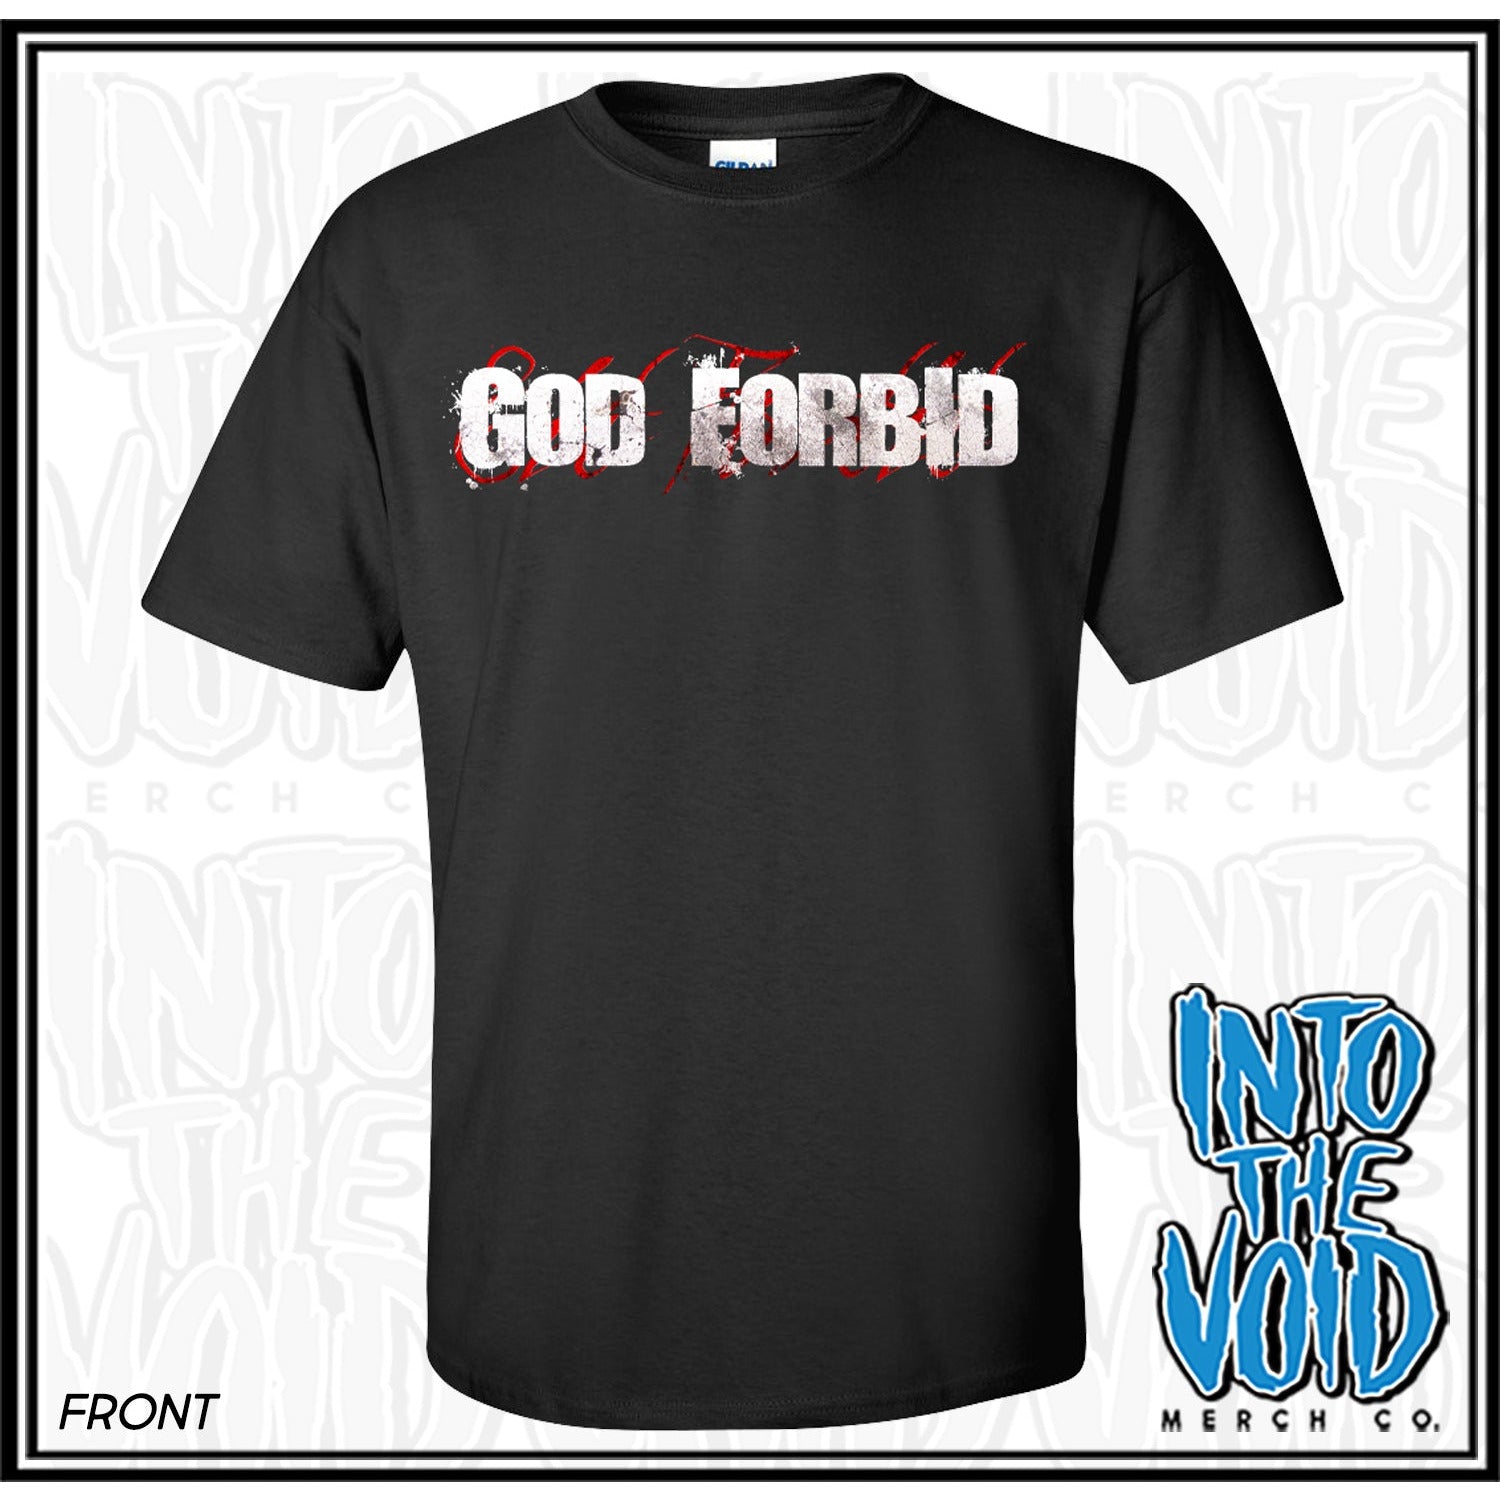 GOD FORBID - Vintage Design - Short Sleeve T-Shirt - INTO THE VOID Merch Co.